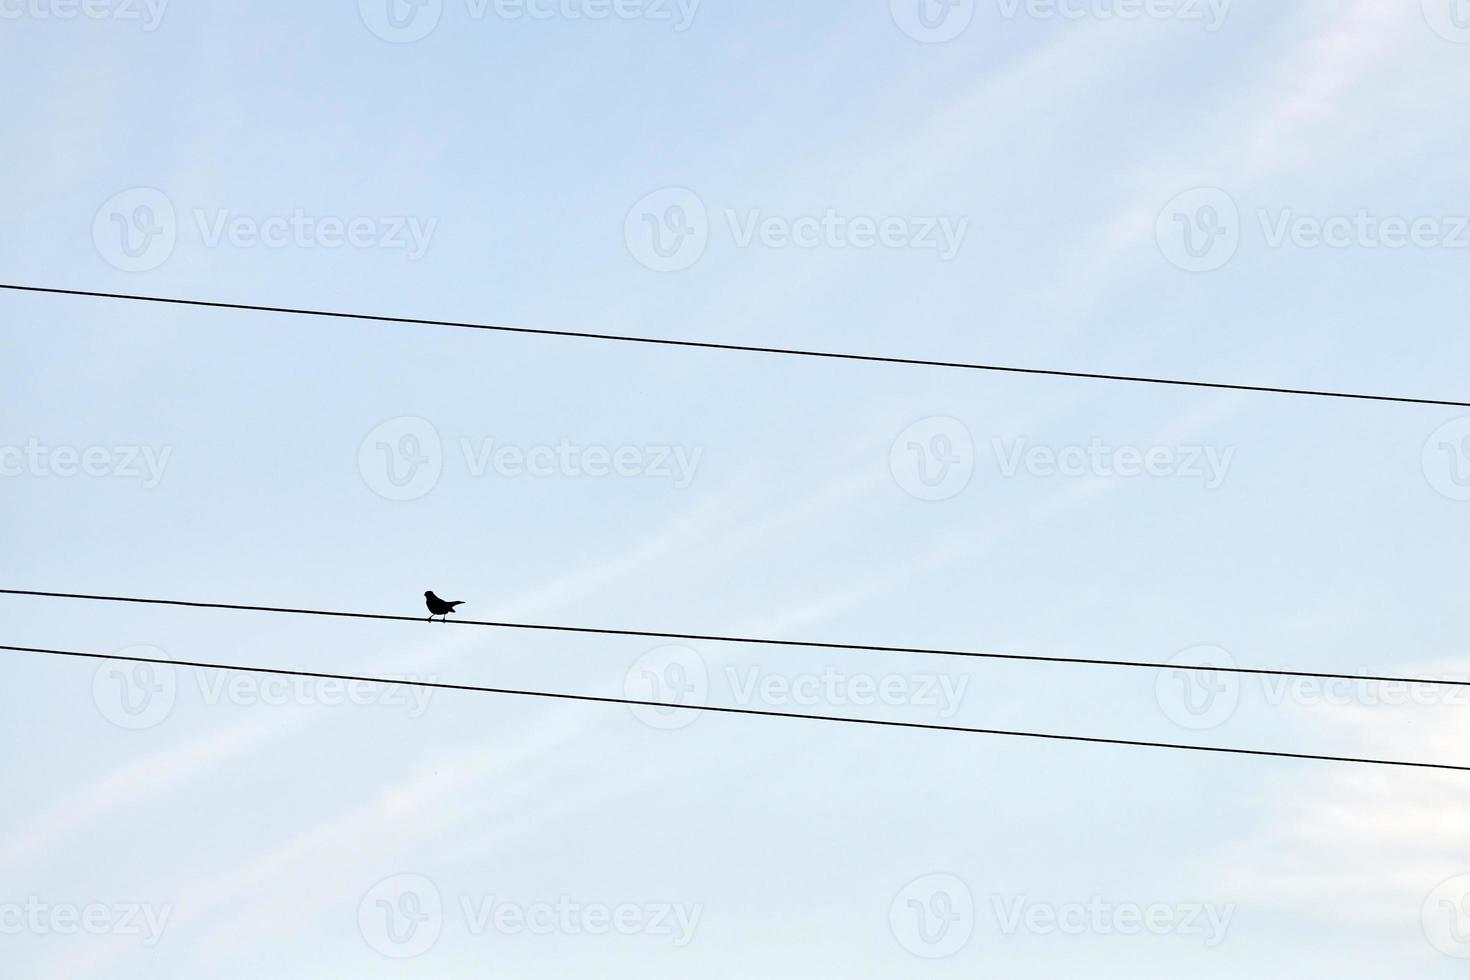 One alone bird on wire photo